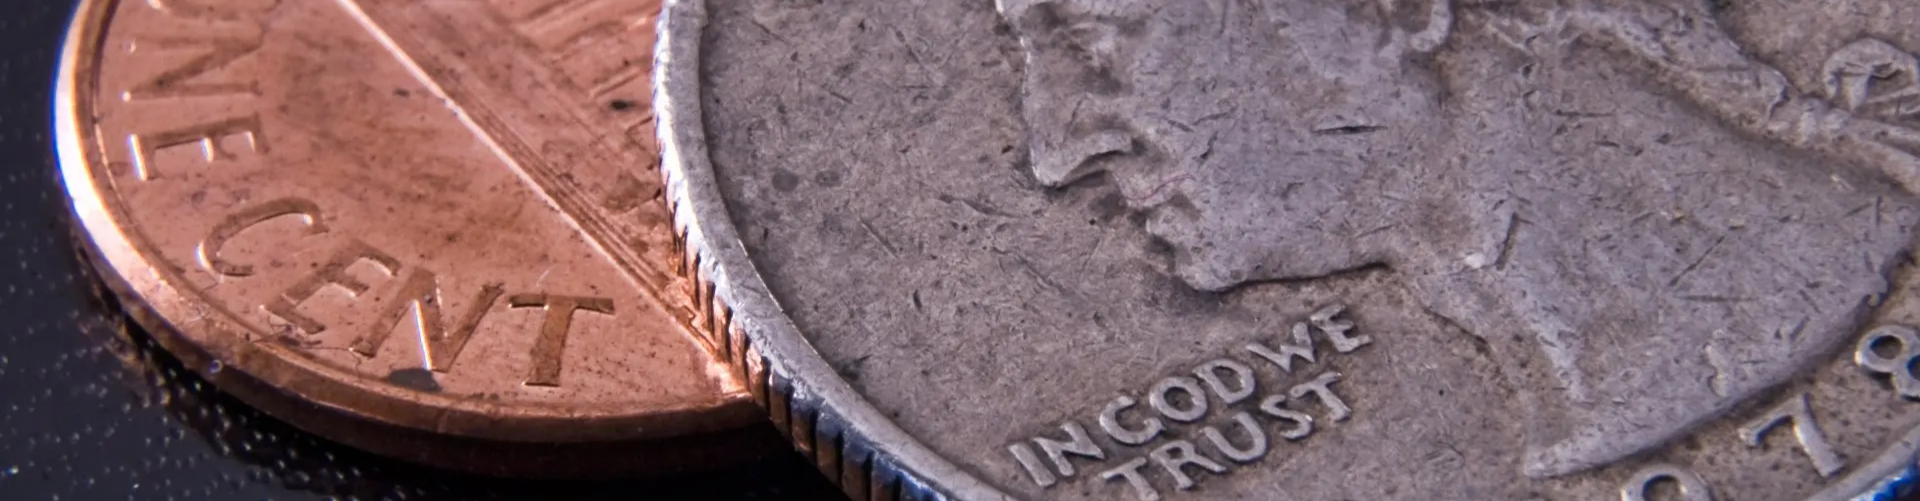 Quarter, penny sitting on a black background